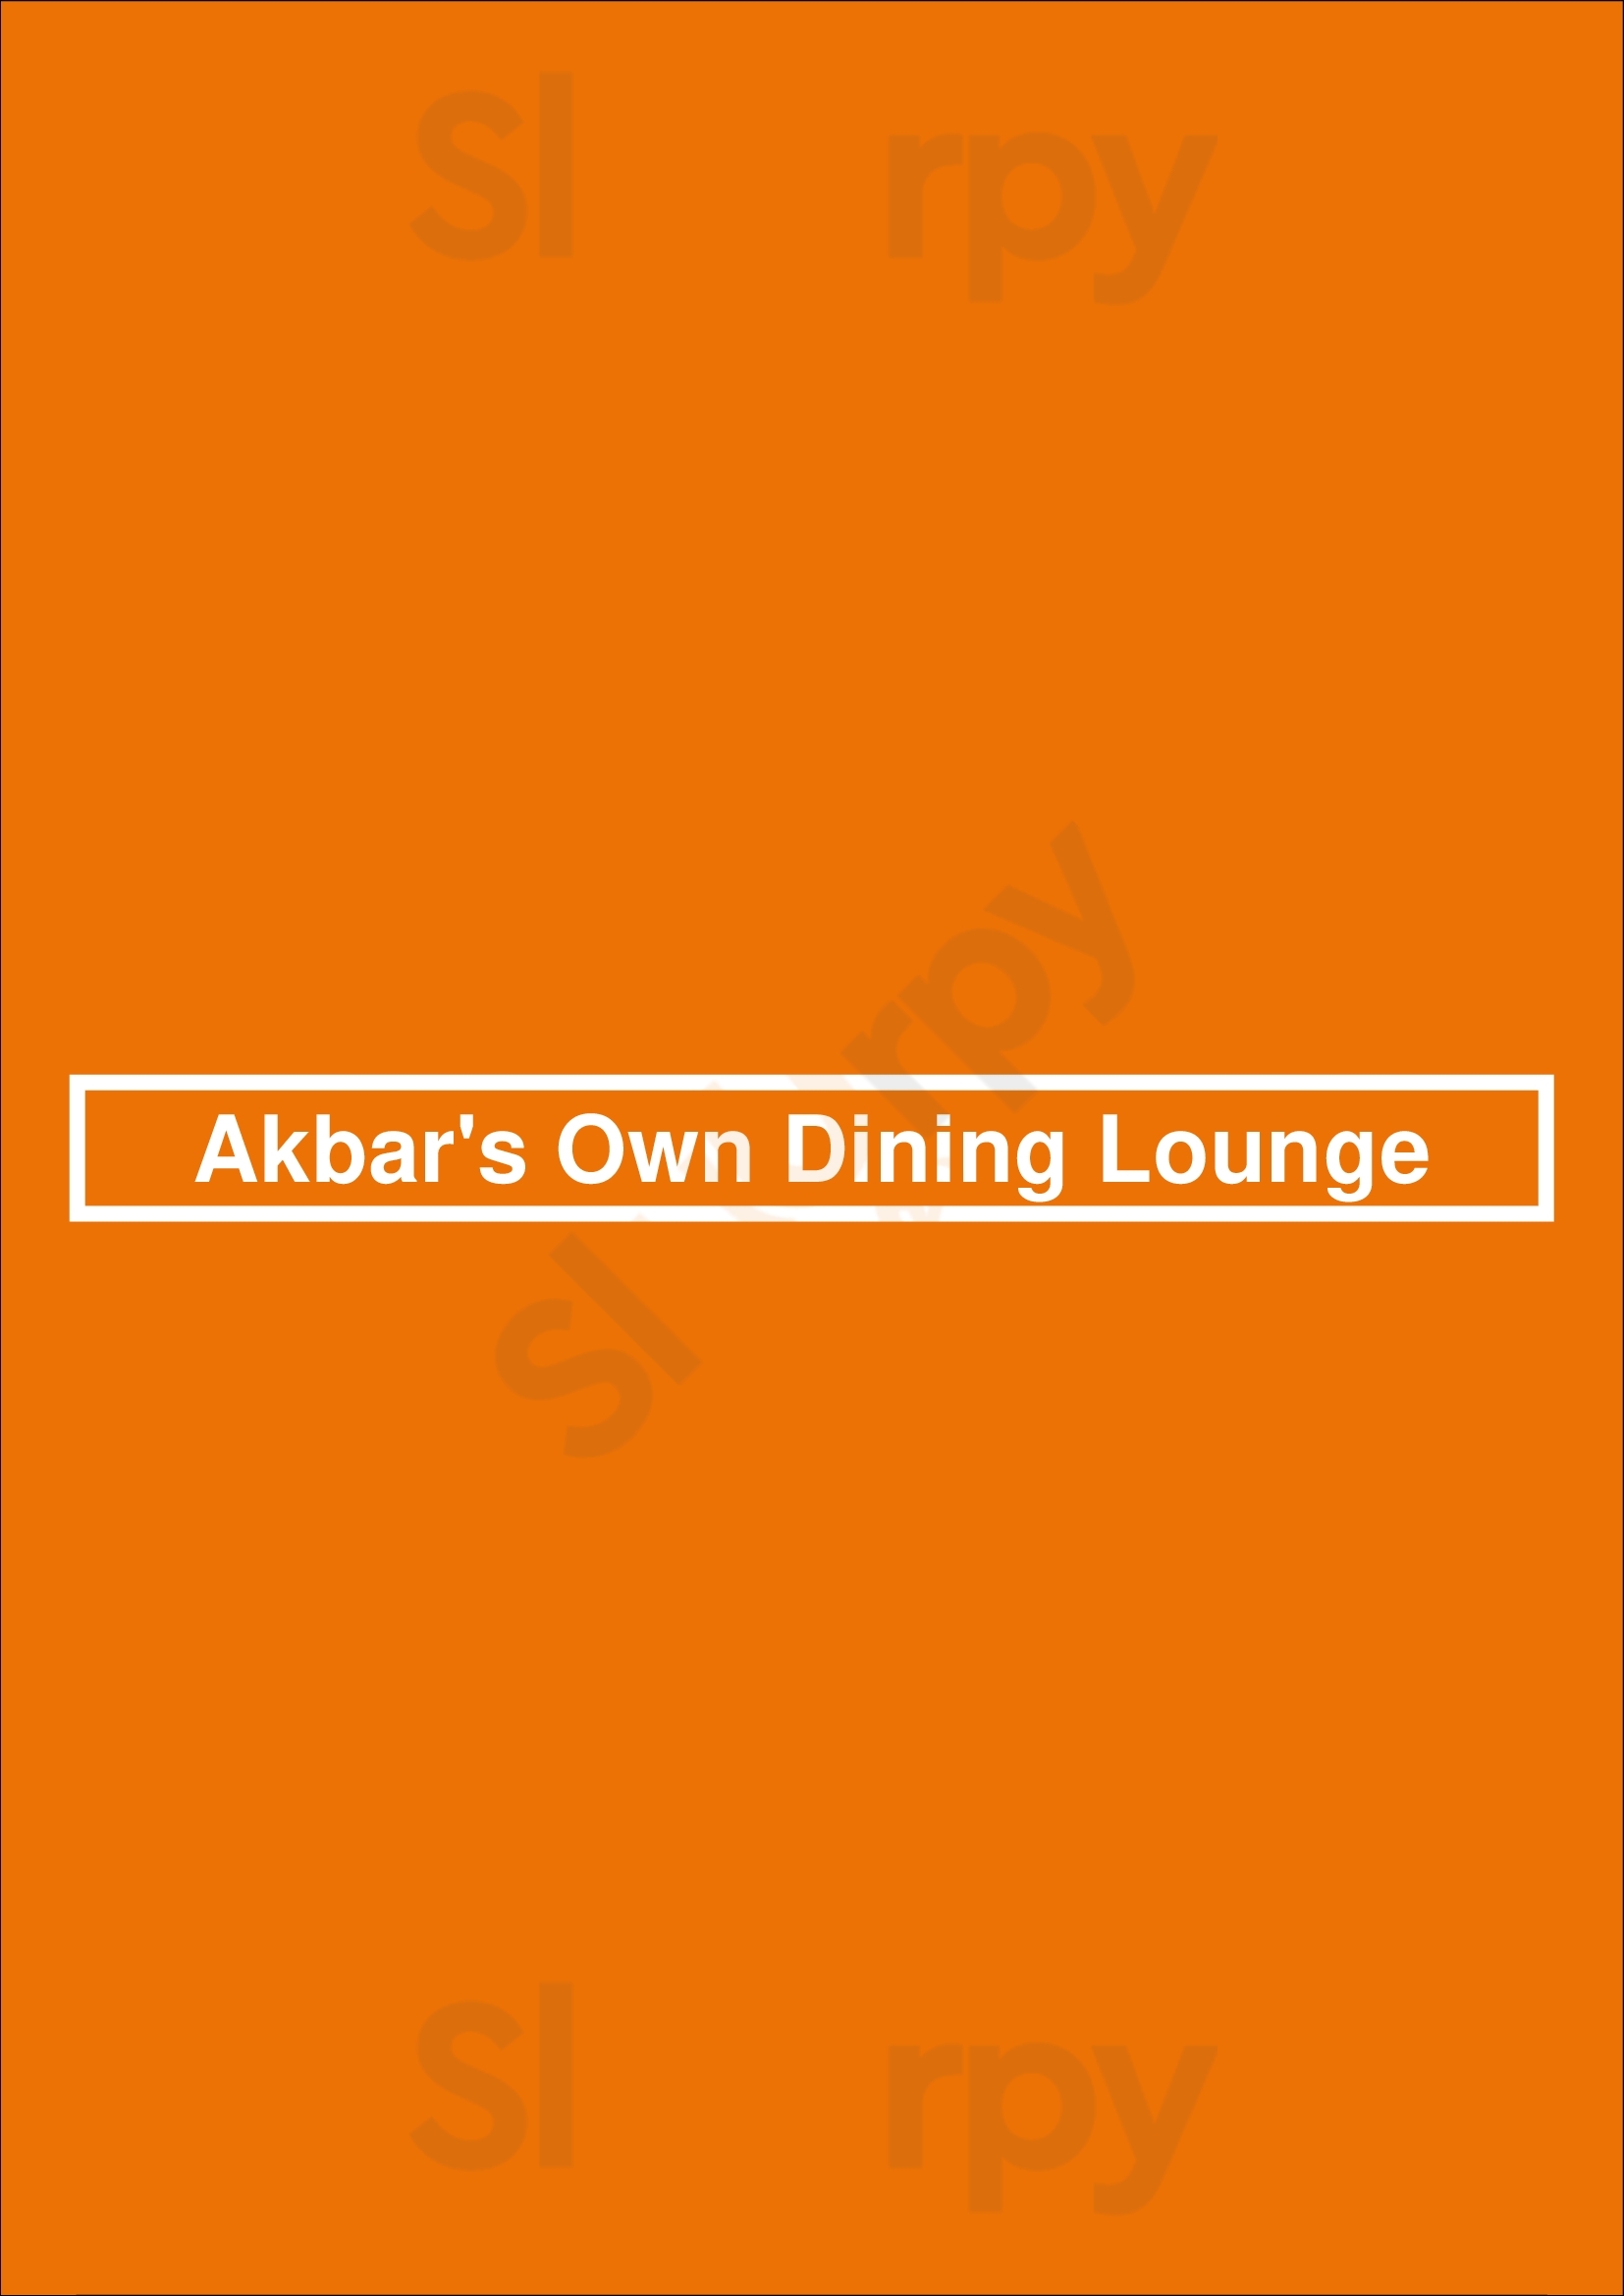 Akbar's Own Dining Lounge Vancouver Menu - 1